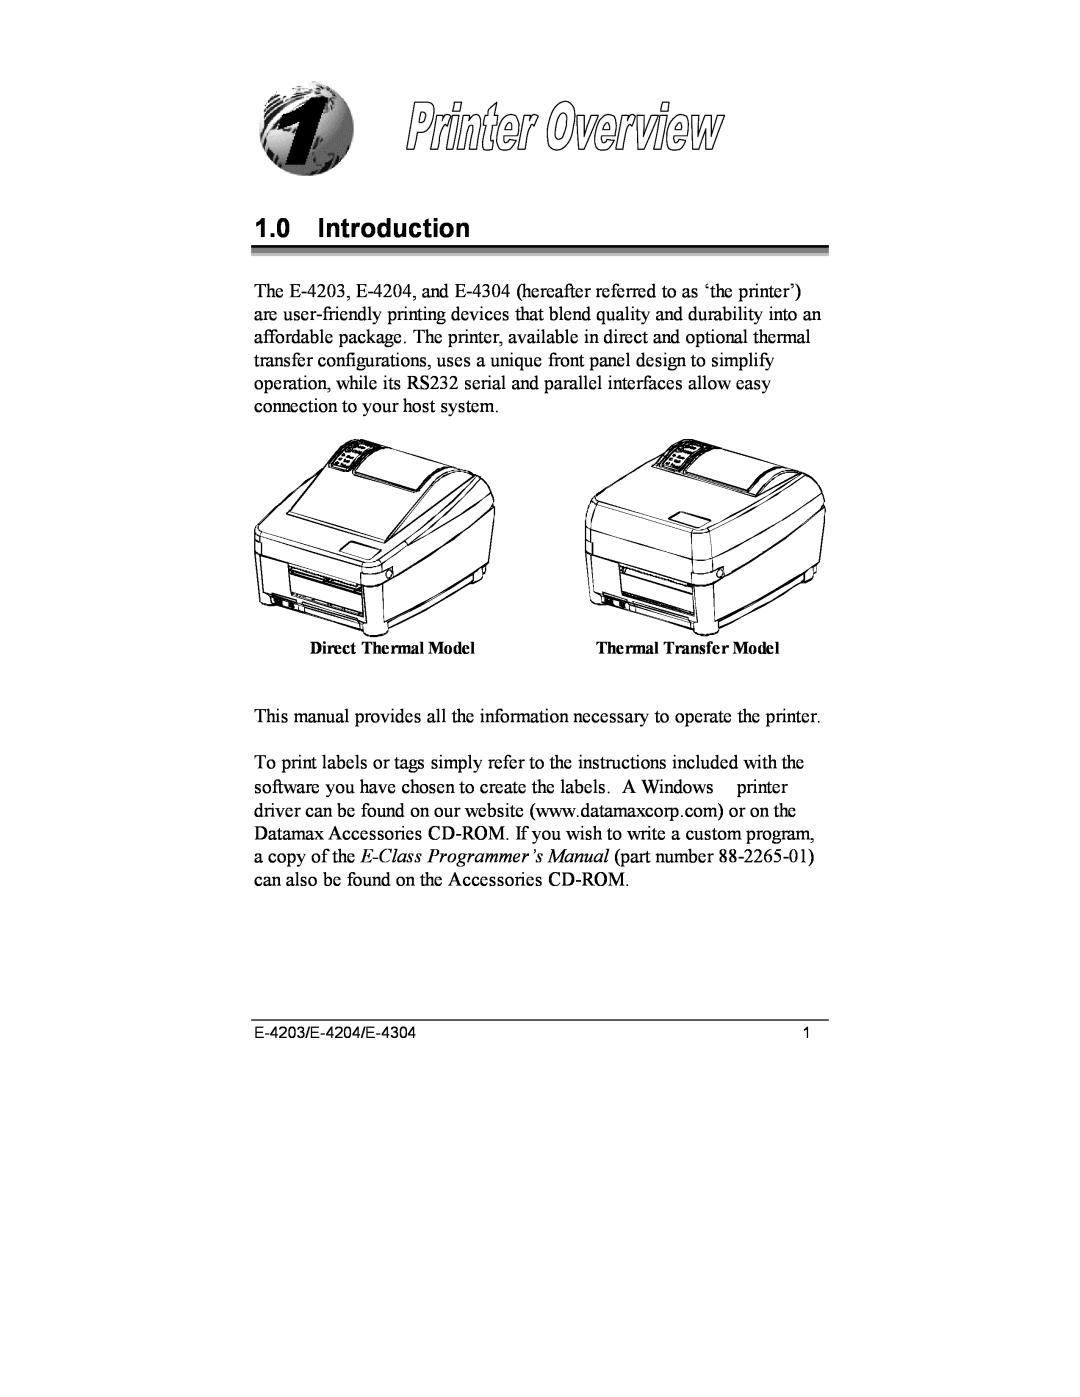 Datamax E-4304e, E-4203, E-4204 manual Introduction, Direct Thermal Model, Thermal Transfer Model 